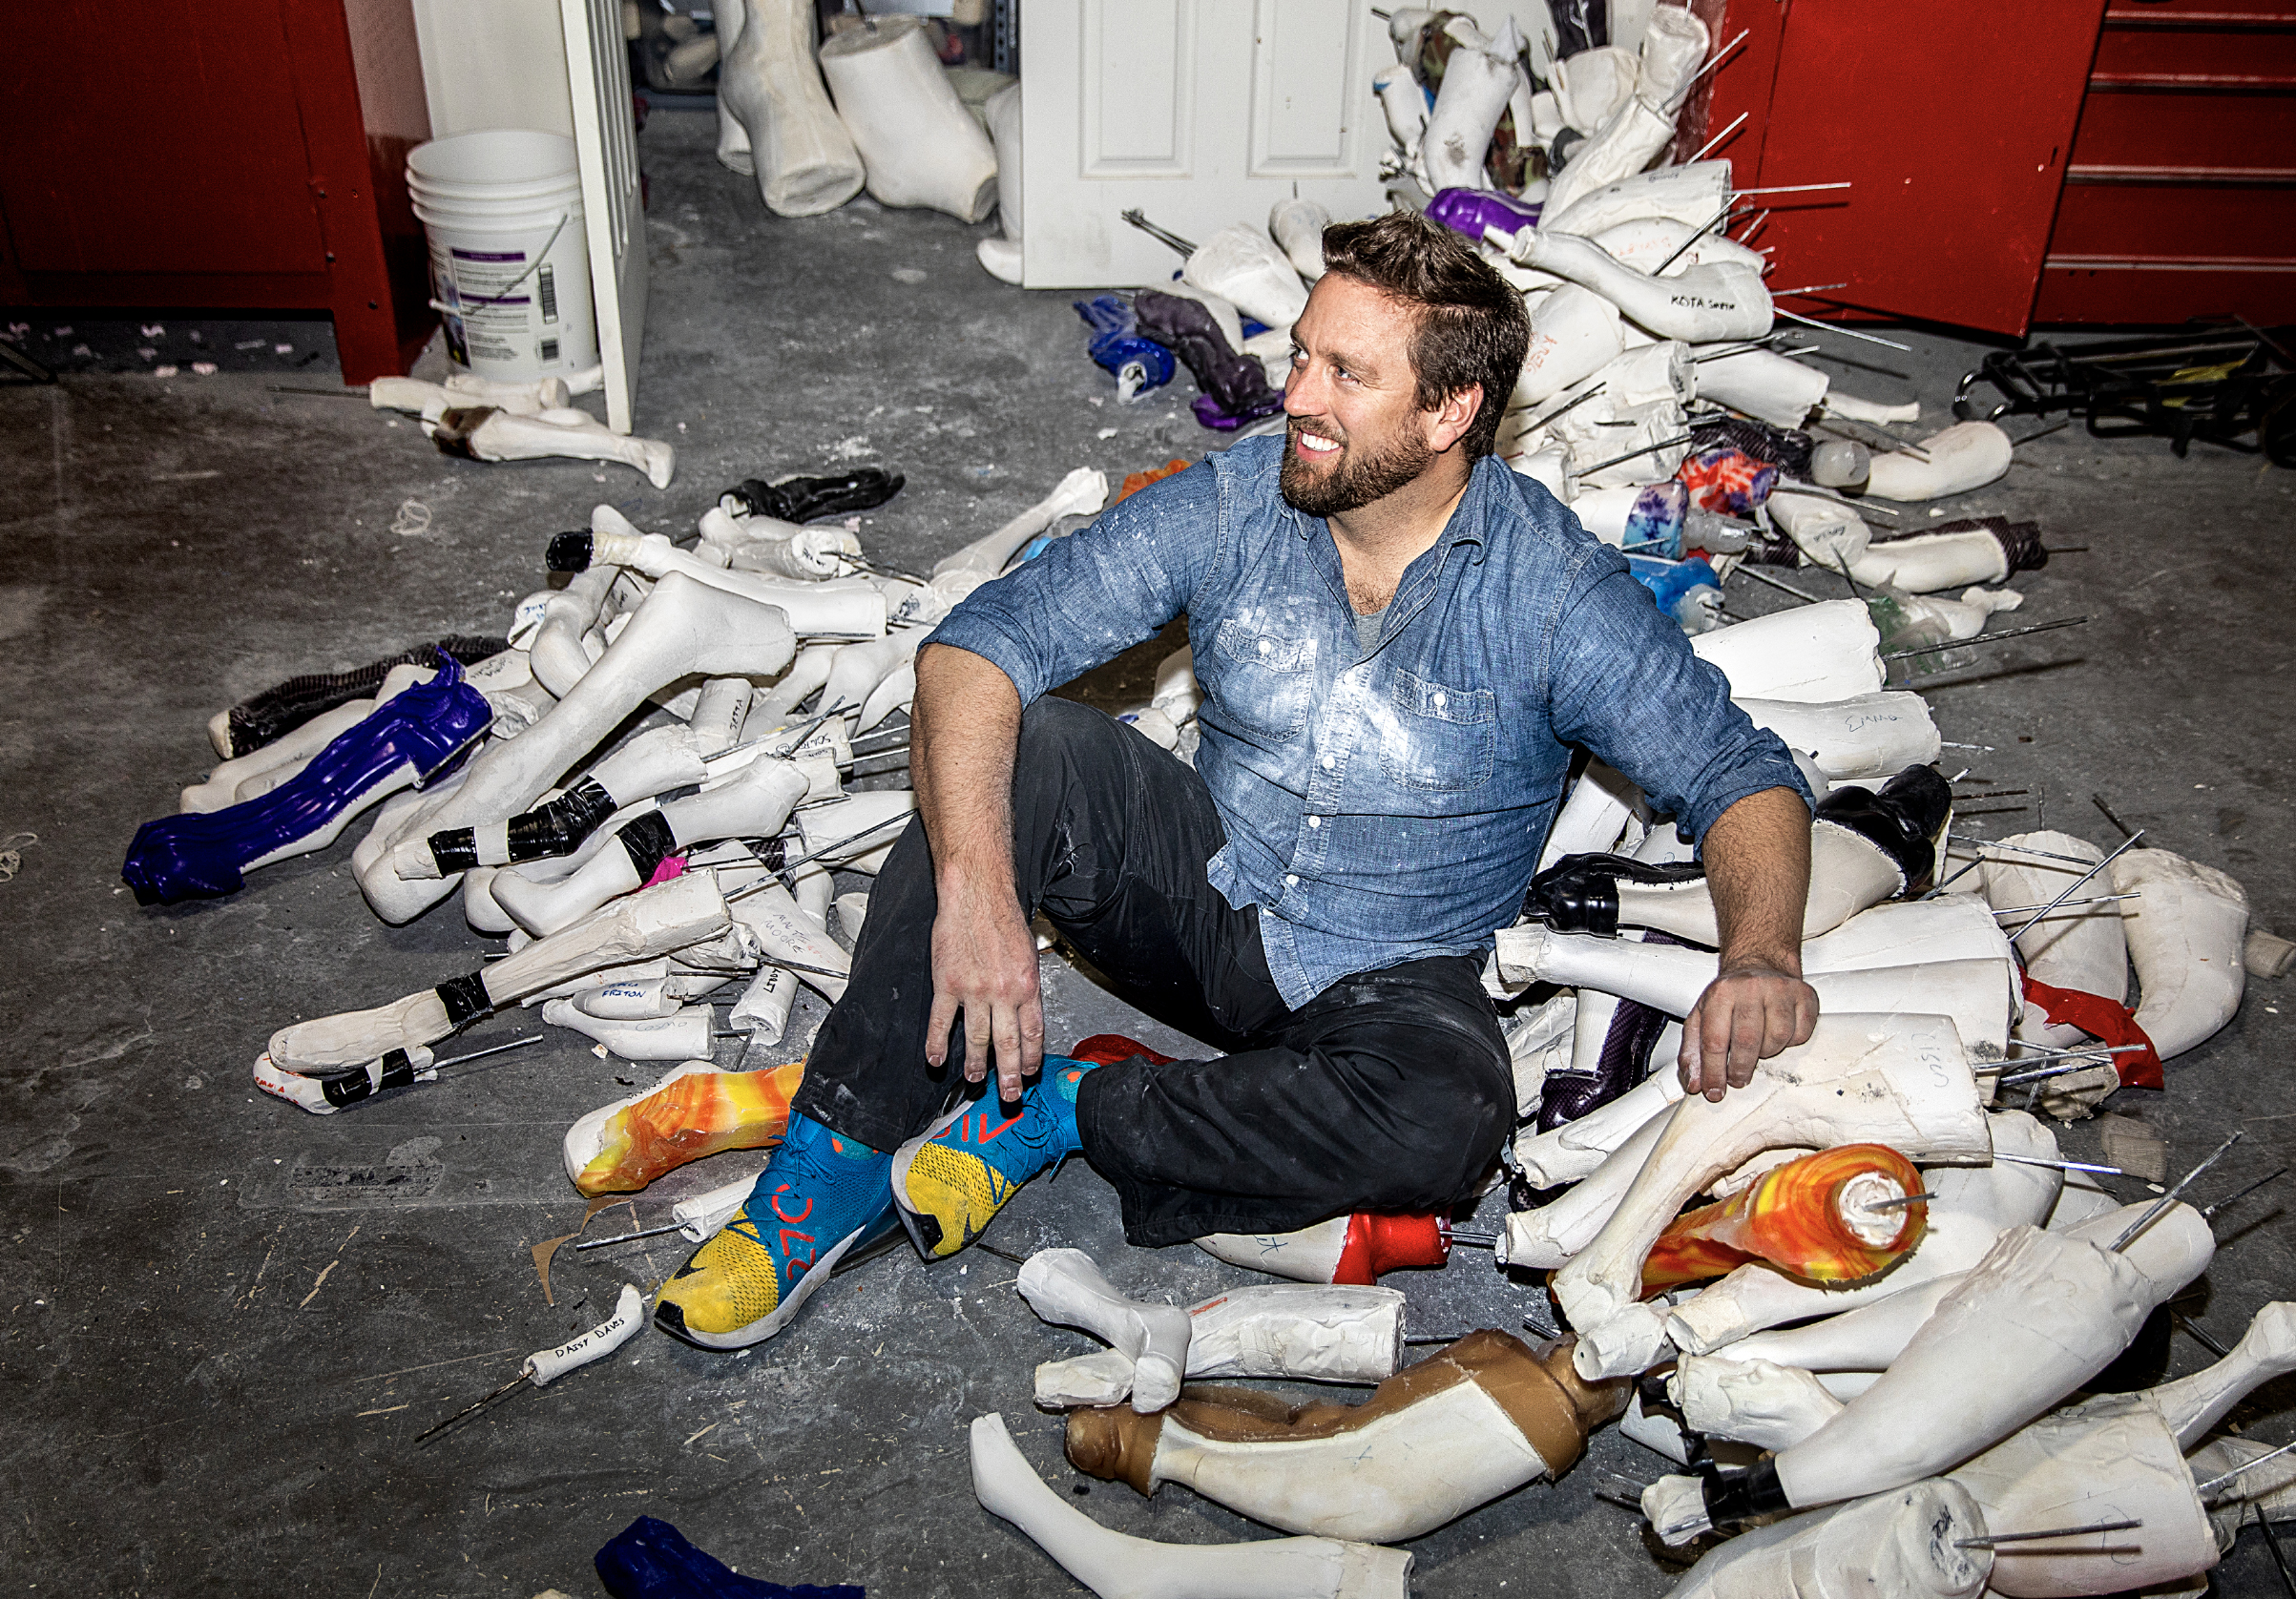 Campana sitting on the floor with dozens of prosthetics he's created